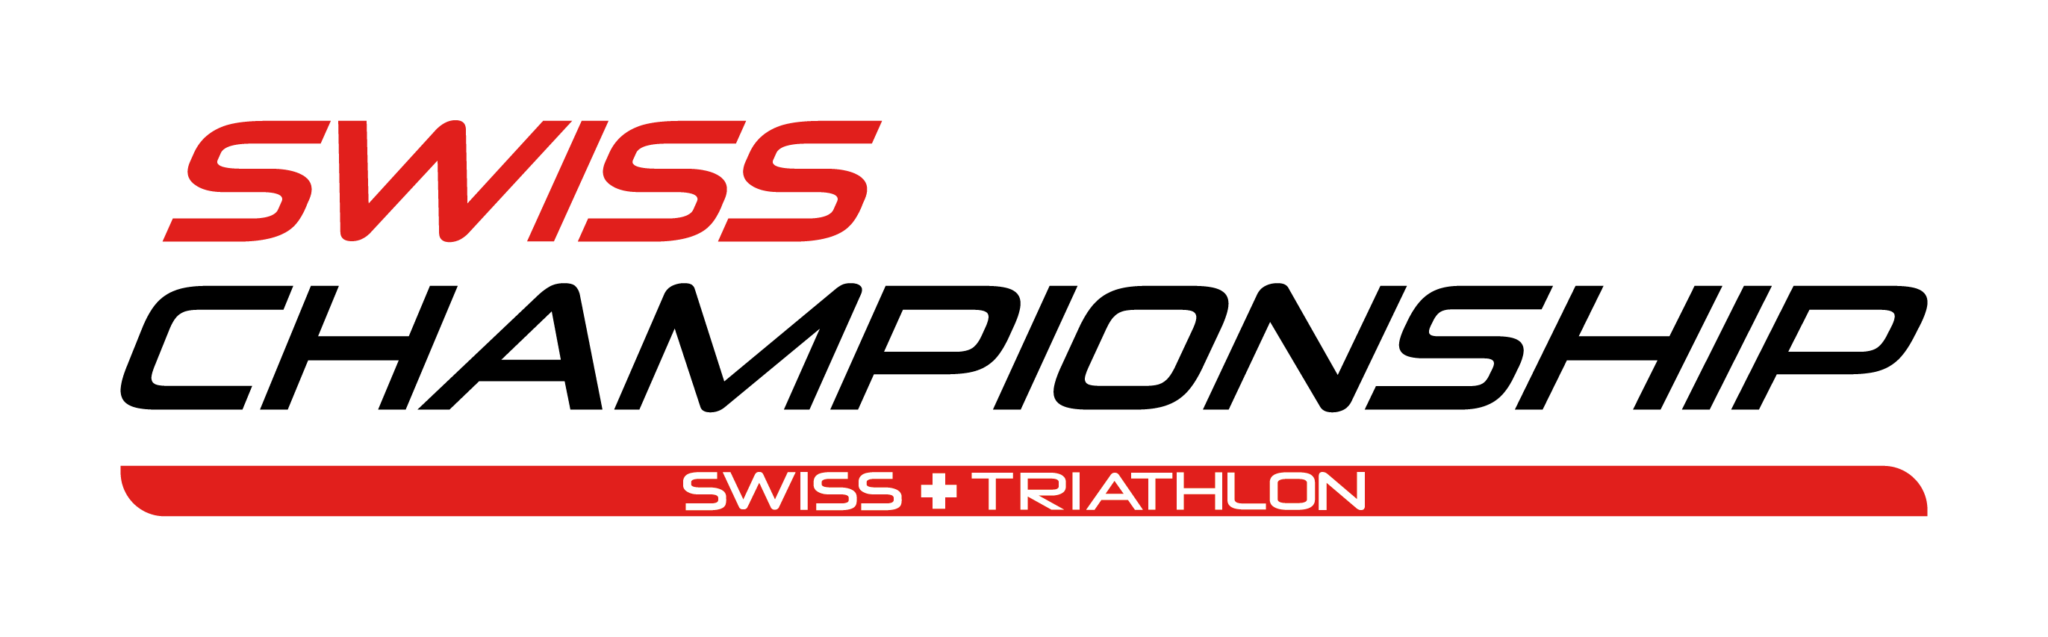 Swiss Championship Triathlon Logo 2048x637 2